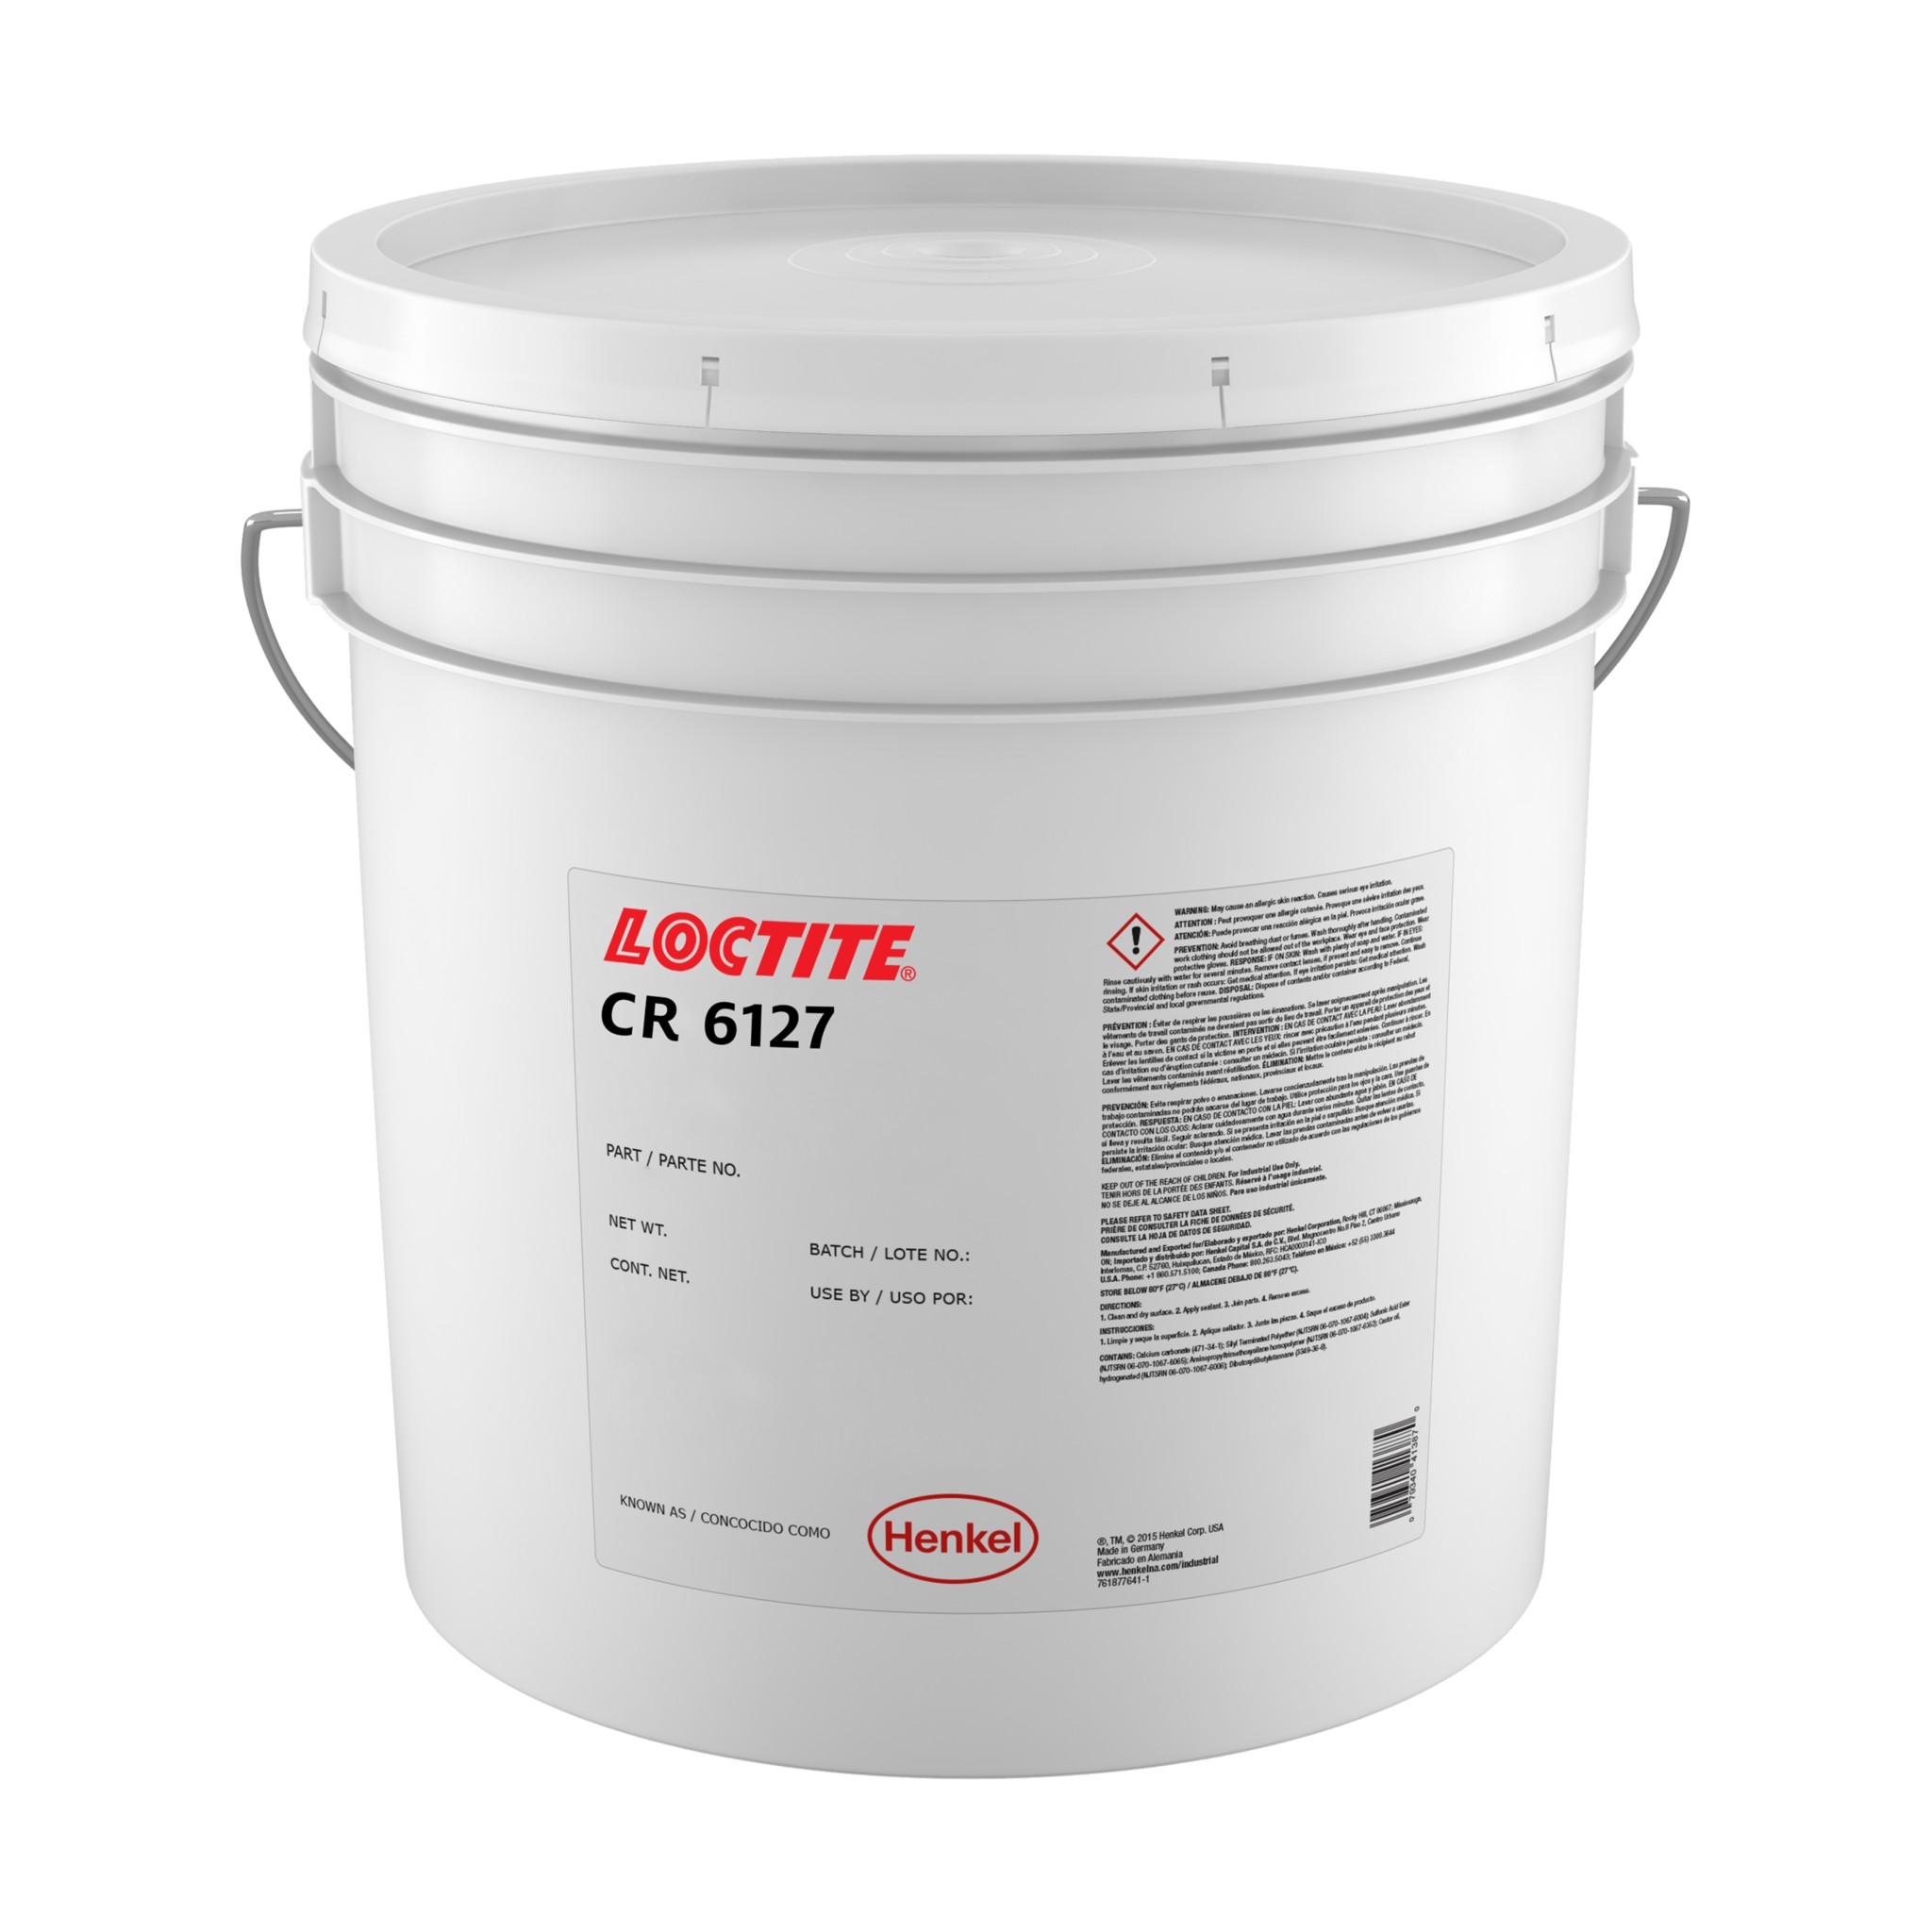 LOCTITE CR 6127 - 2-part, polyurethane-based casting resin 